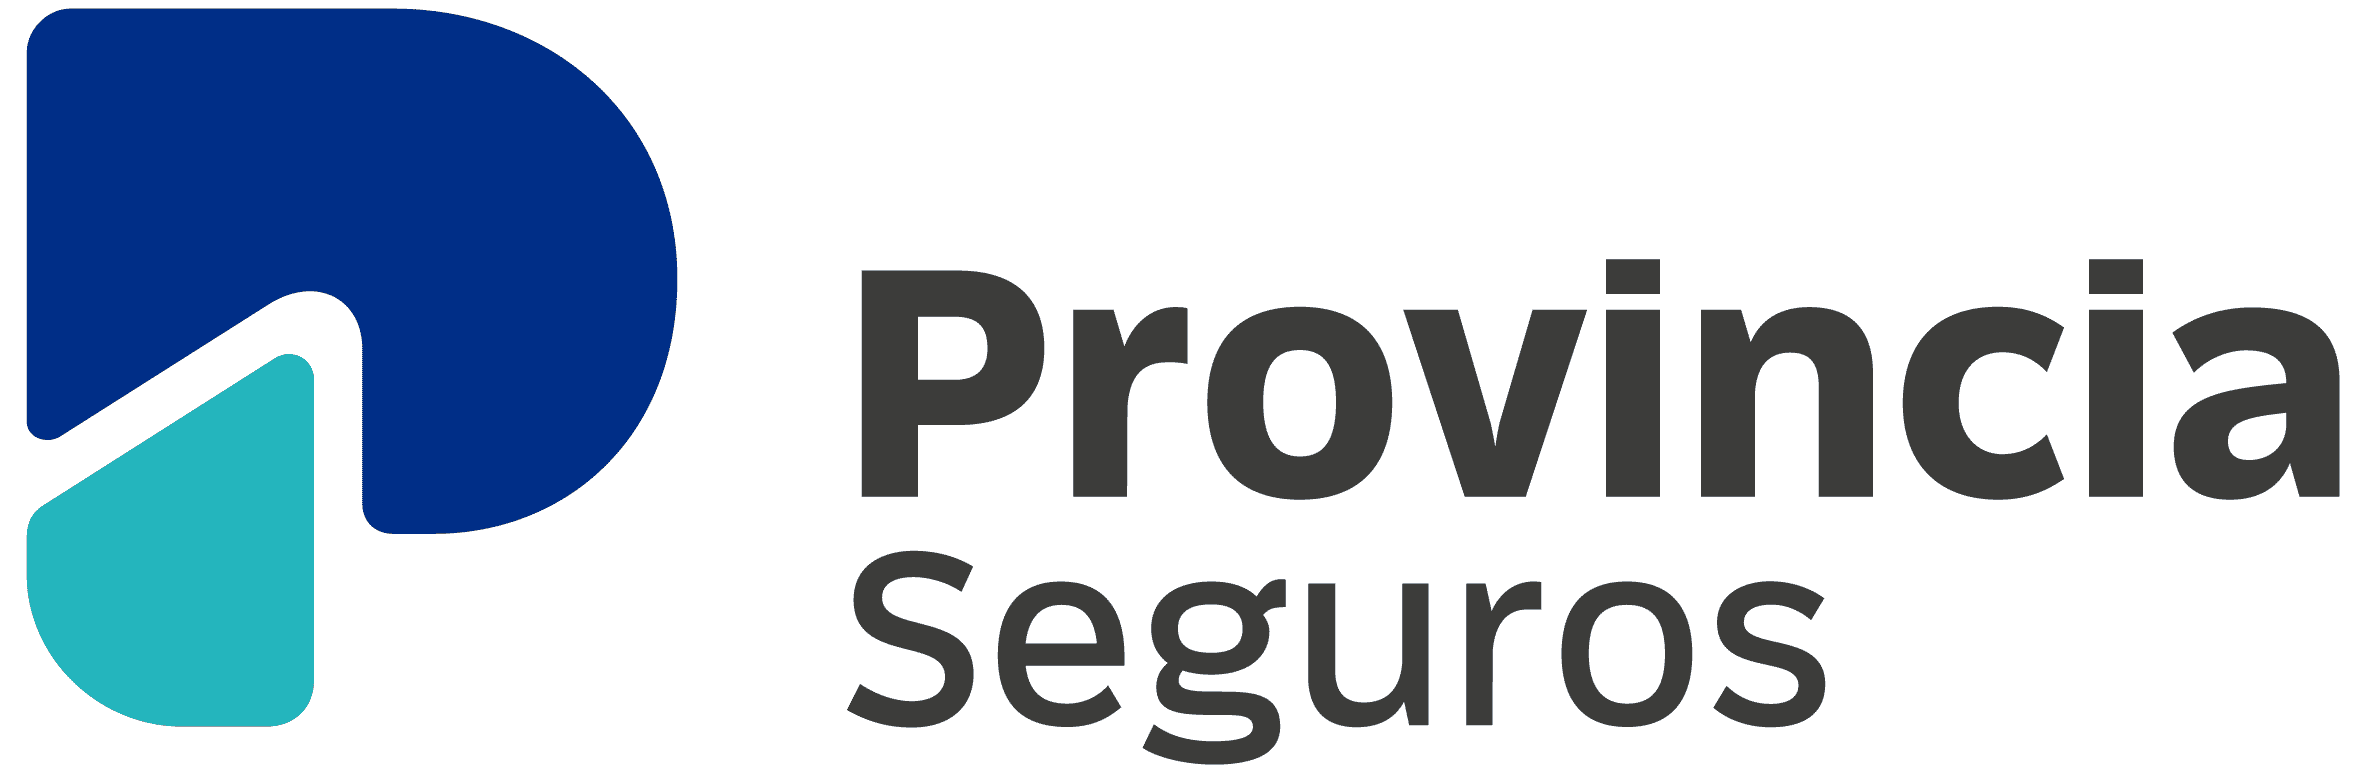 Provincia Seguros